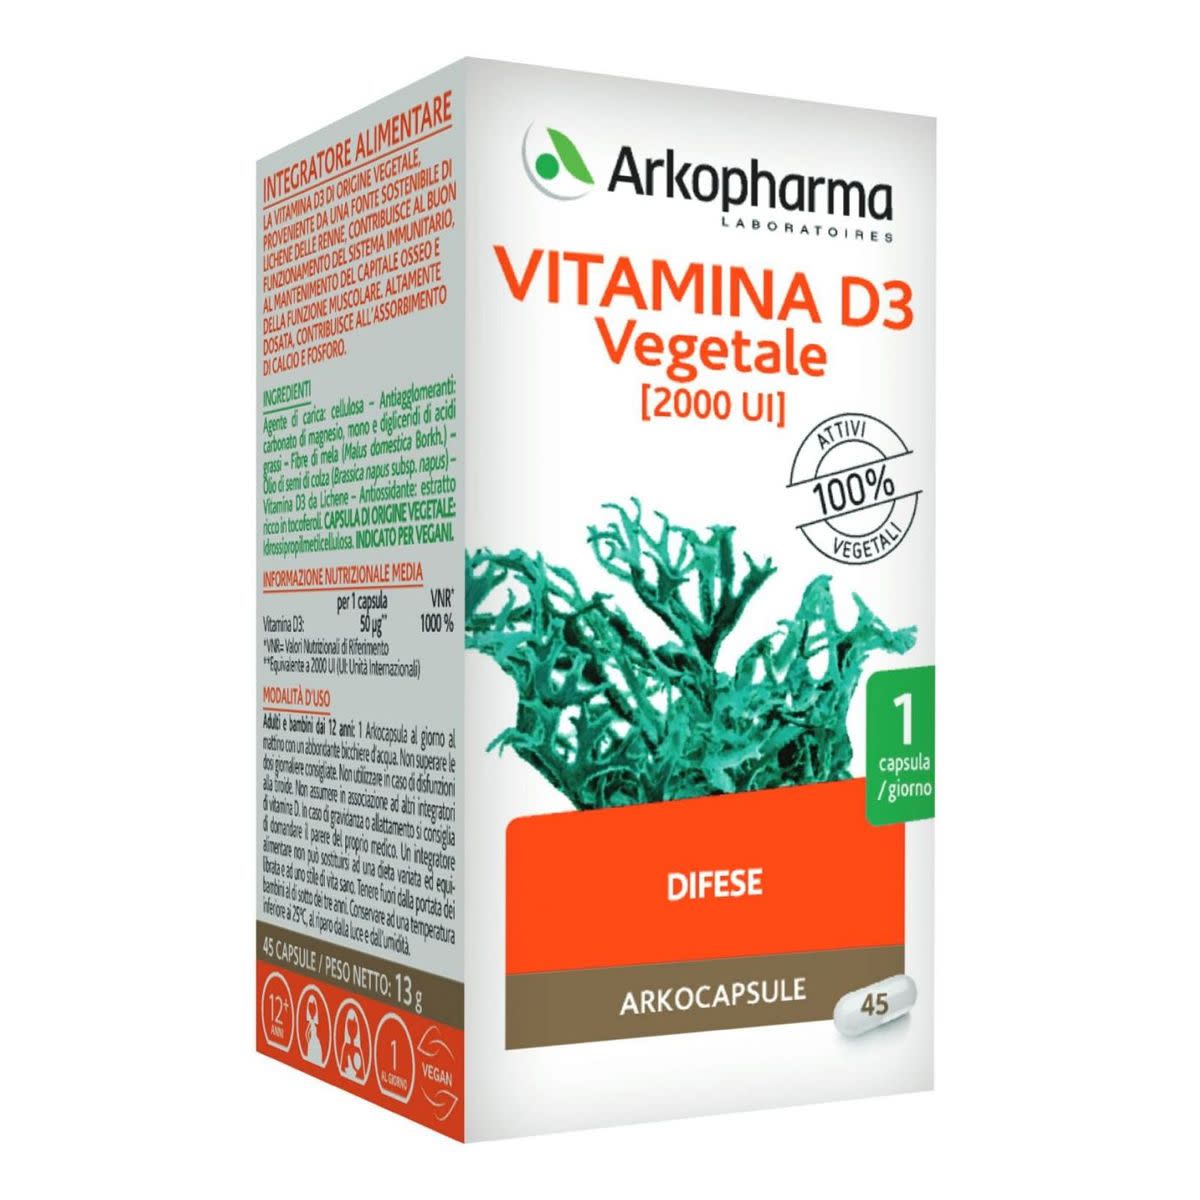 982750996 - Arkopharma Vitamina D3 Integratore difese 45 arkocapsule - 4738982_2.jpg